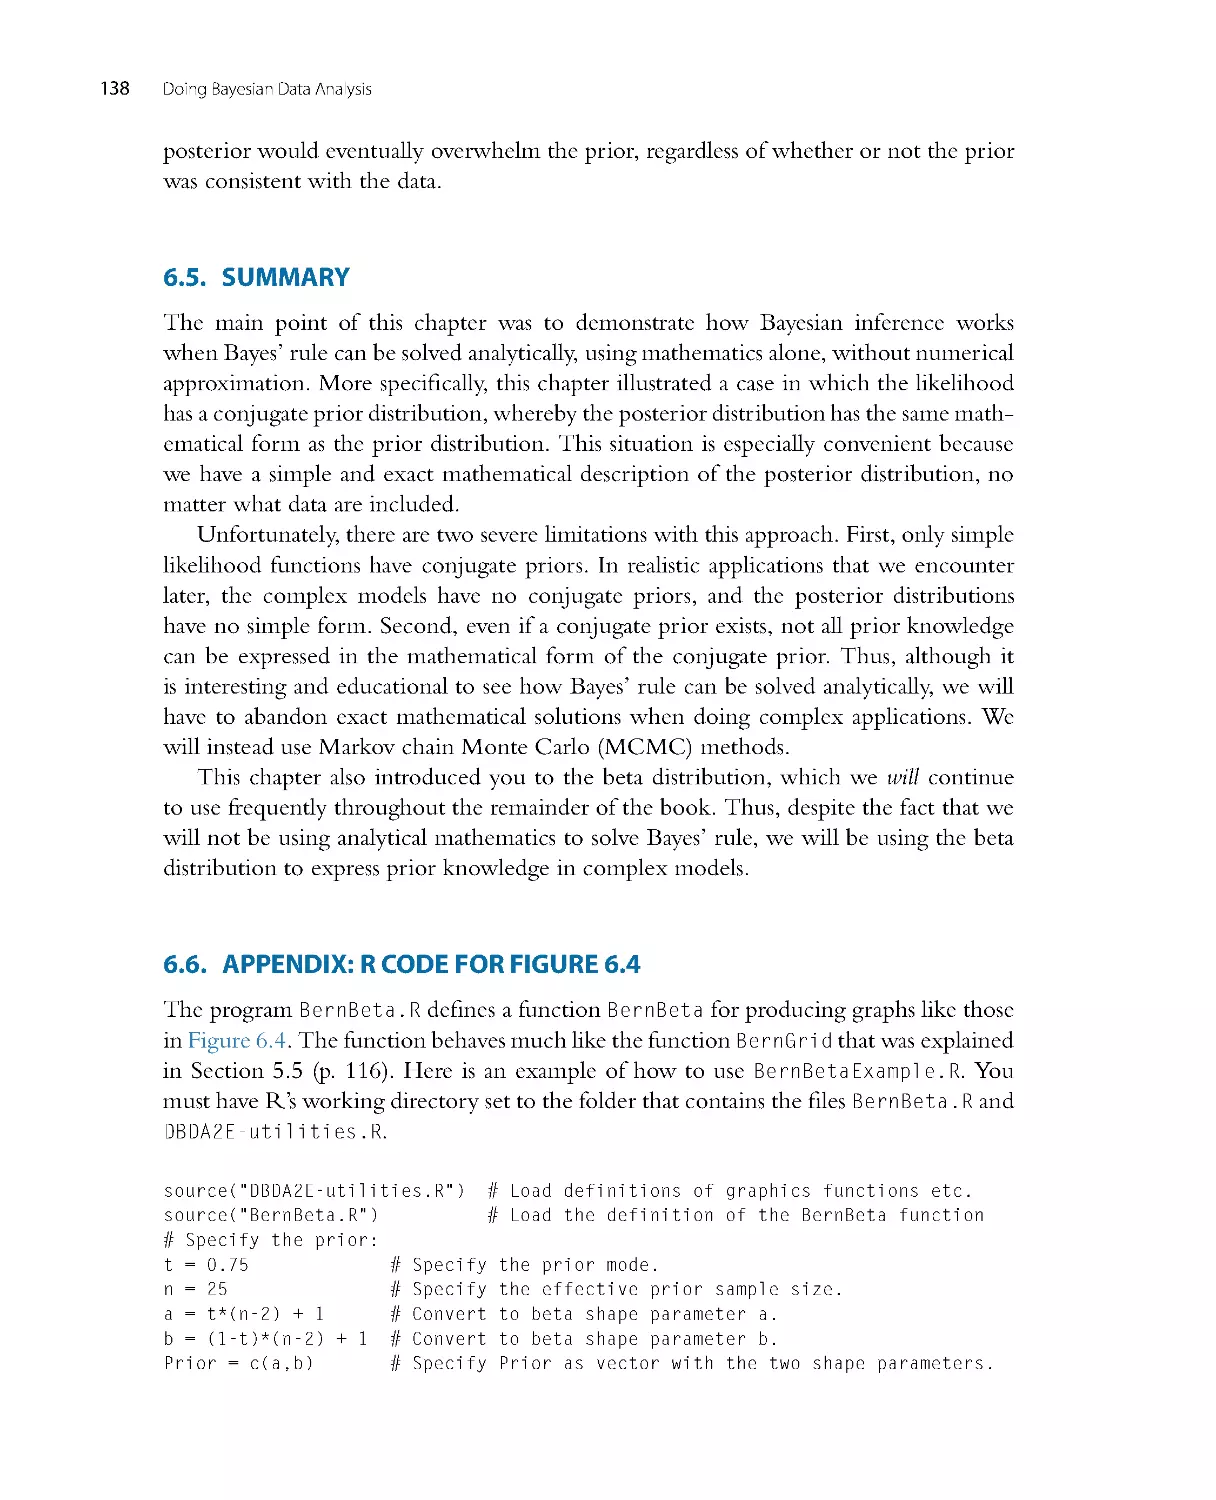 Summary
Appendix: R Code for Figure 6.4